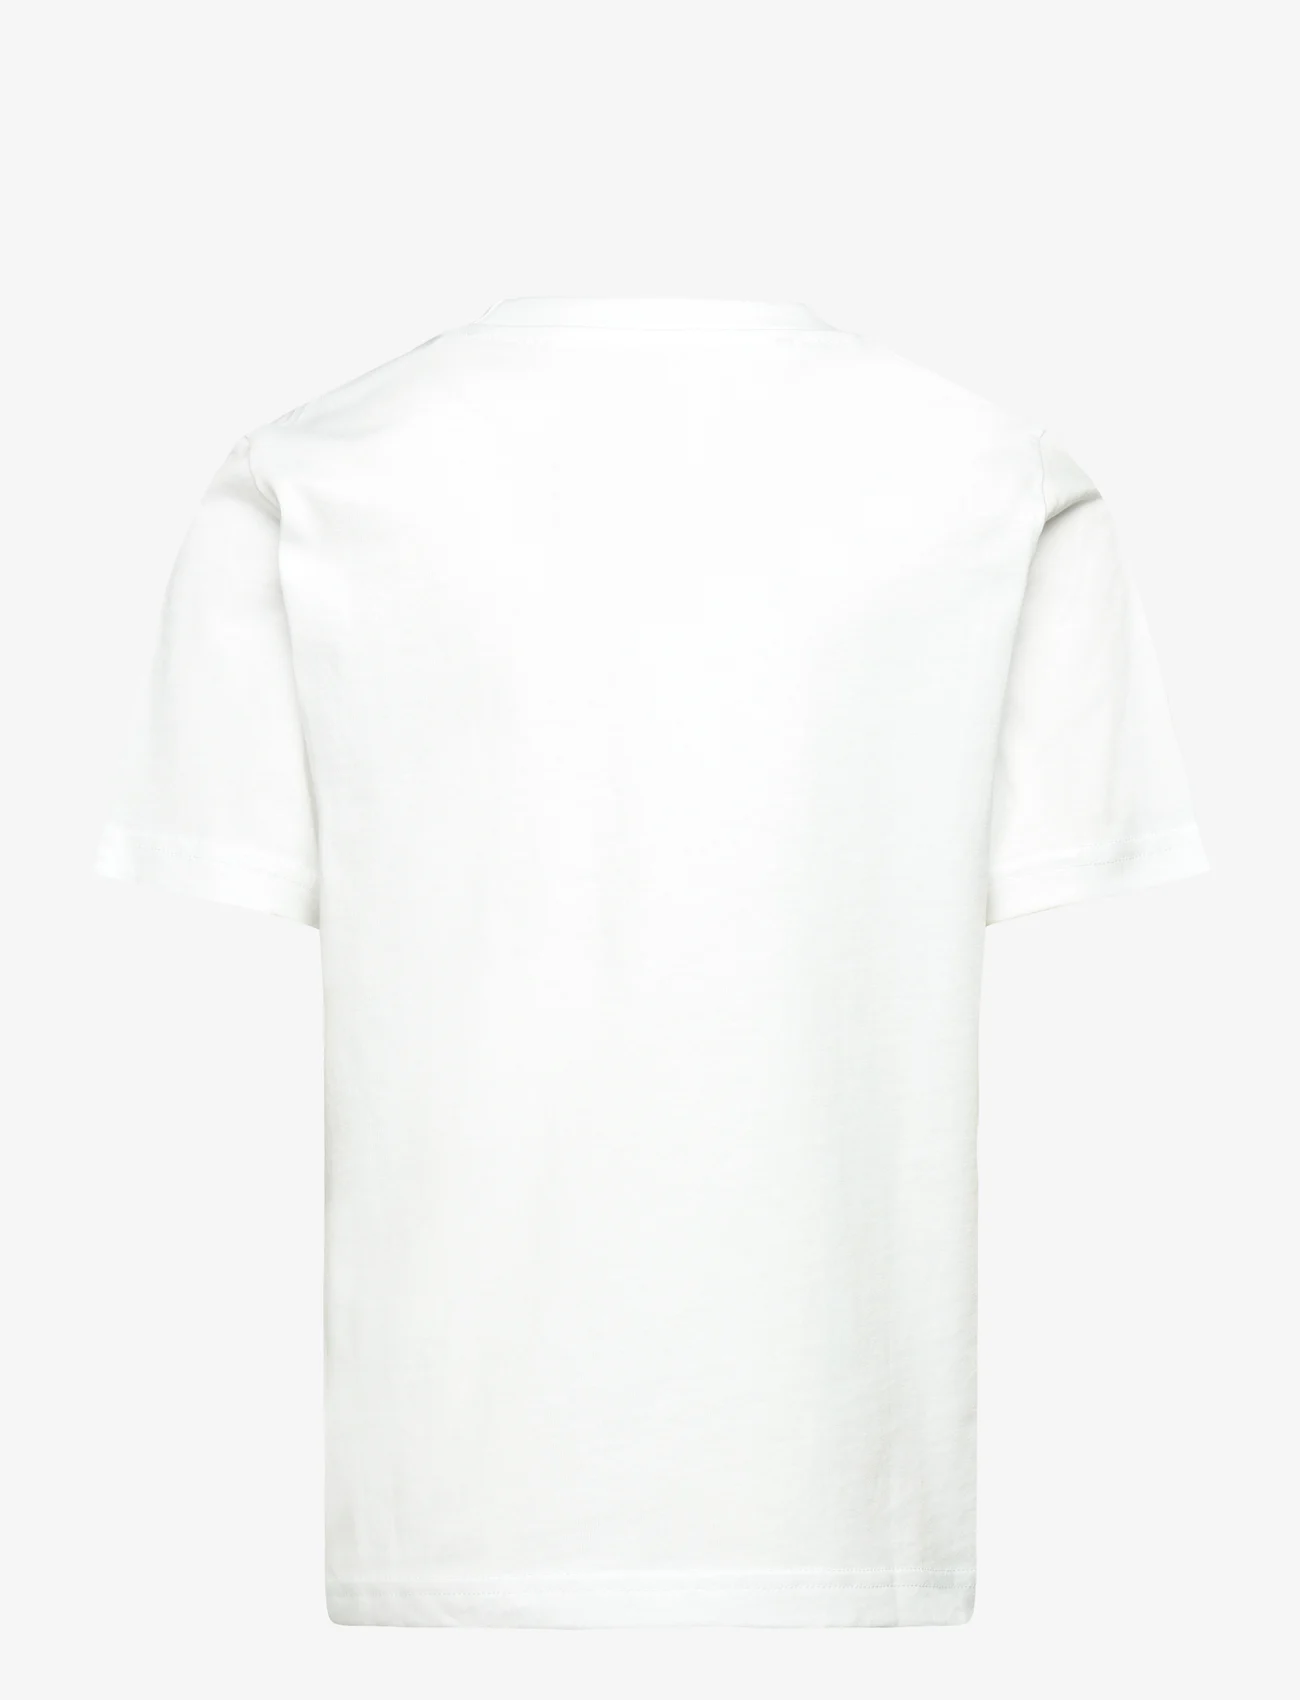 adidas Performance - G ANIMAL TEE - short-sleeved t-shirts - white - 1